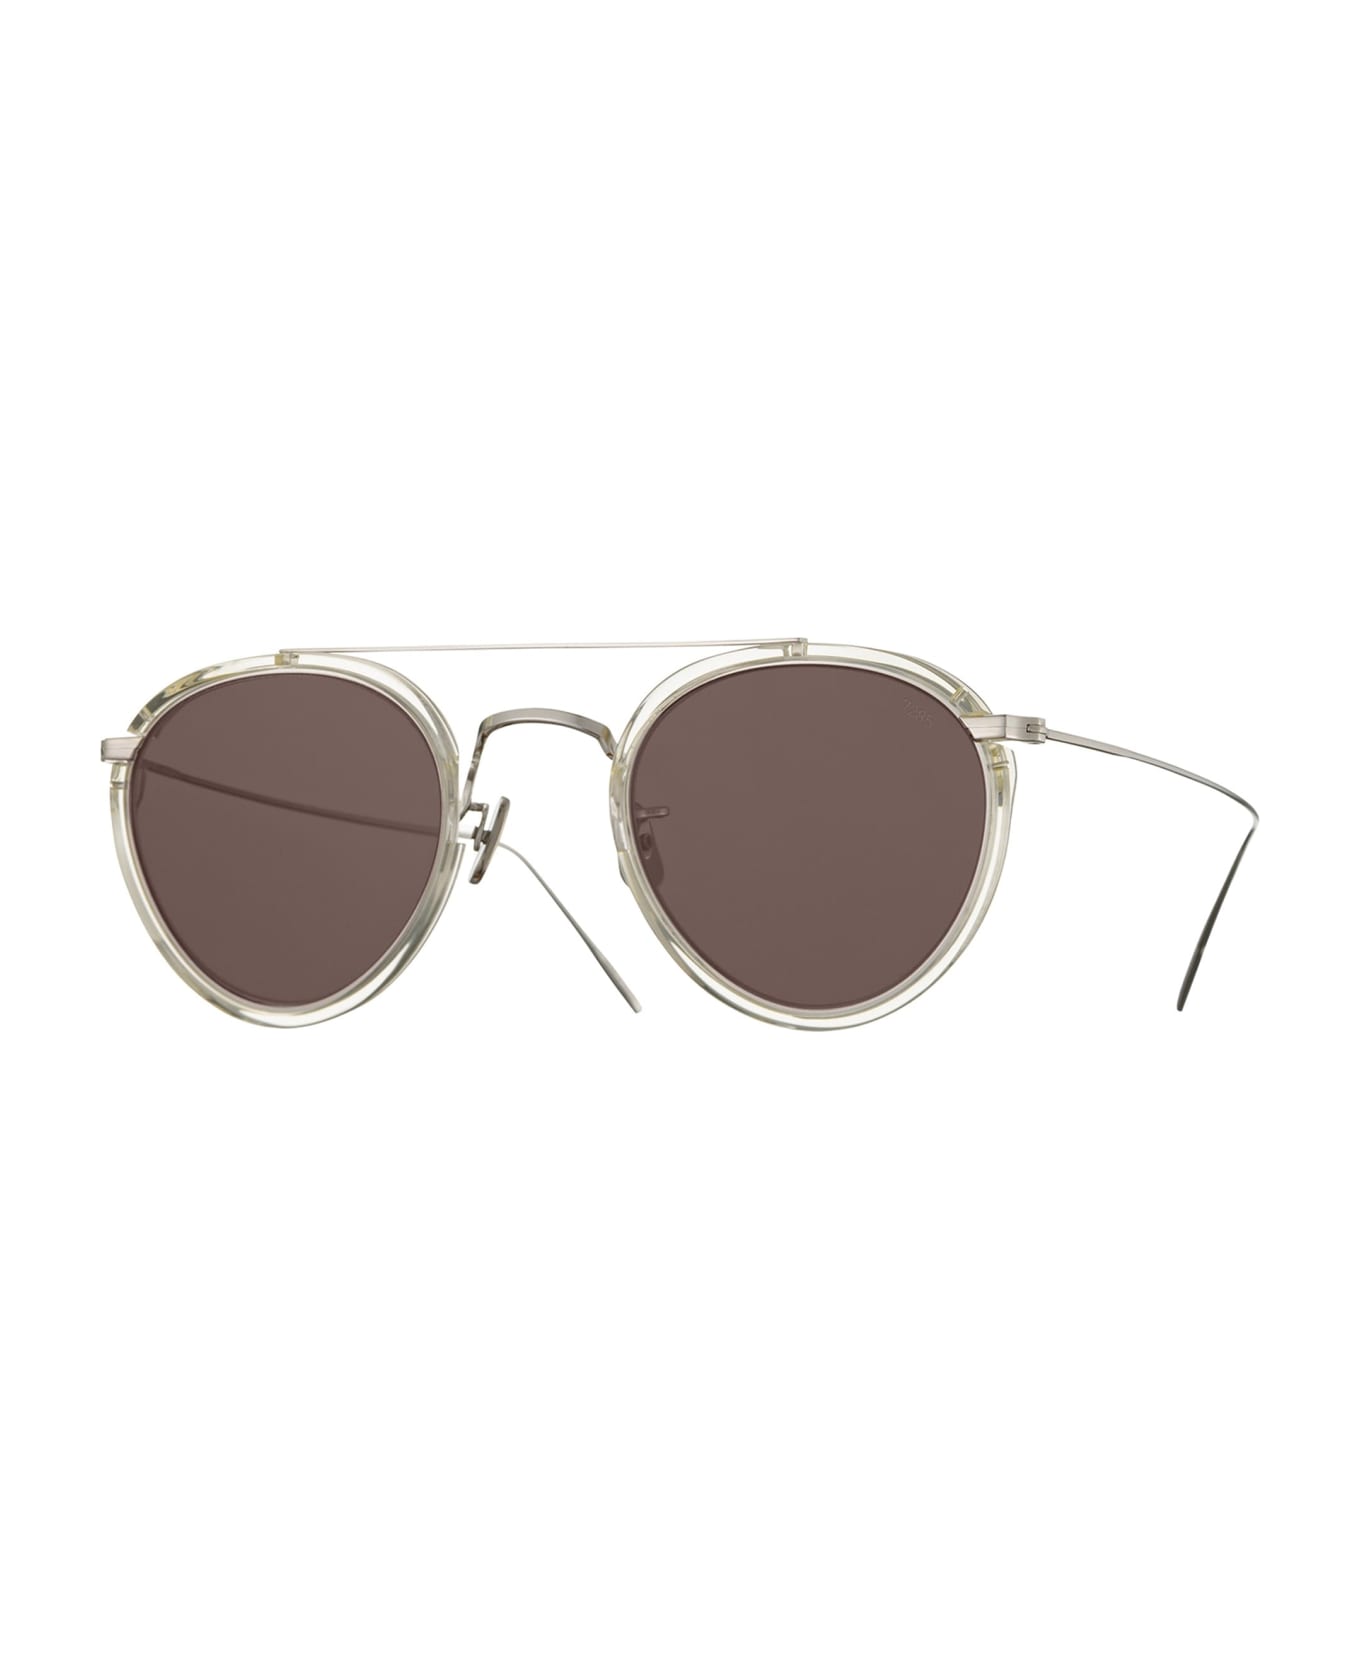 Eyevan 7285 762 - Silver Sunglasses - Silver サングラス